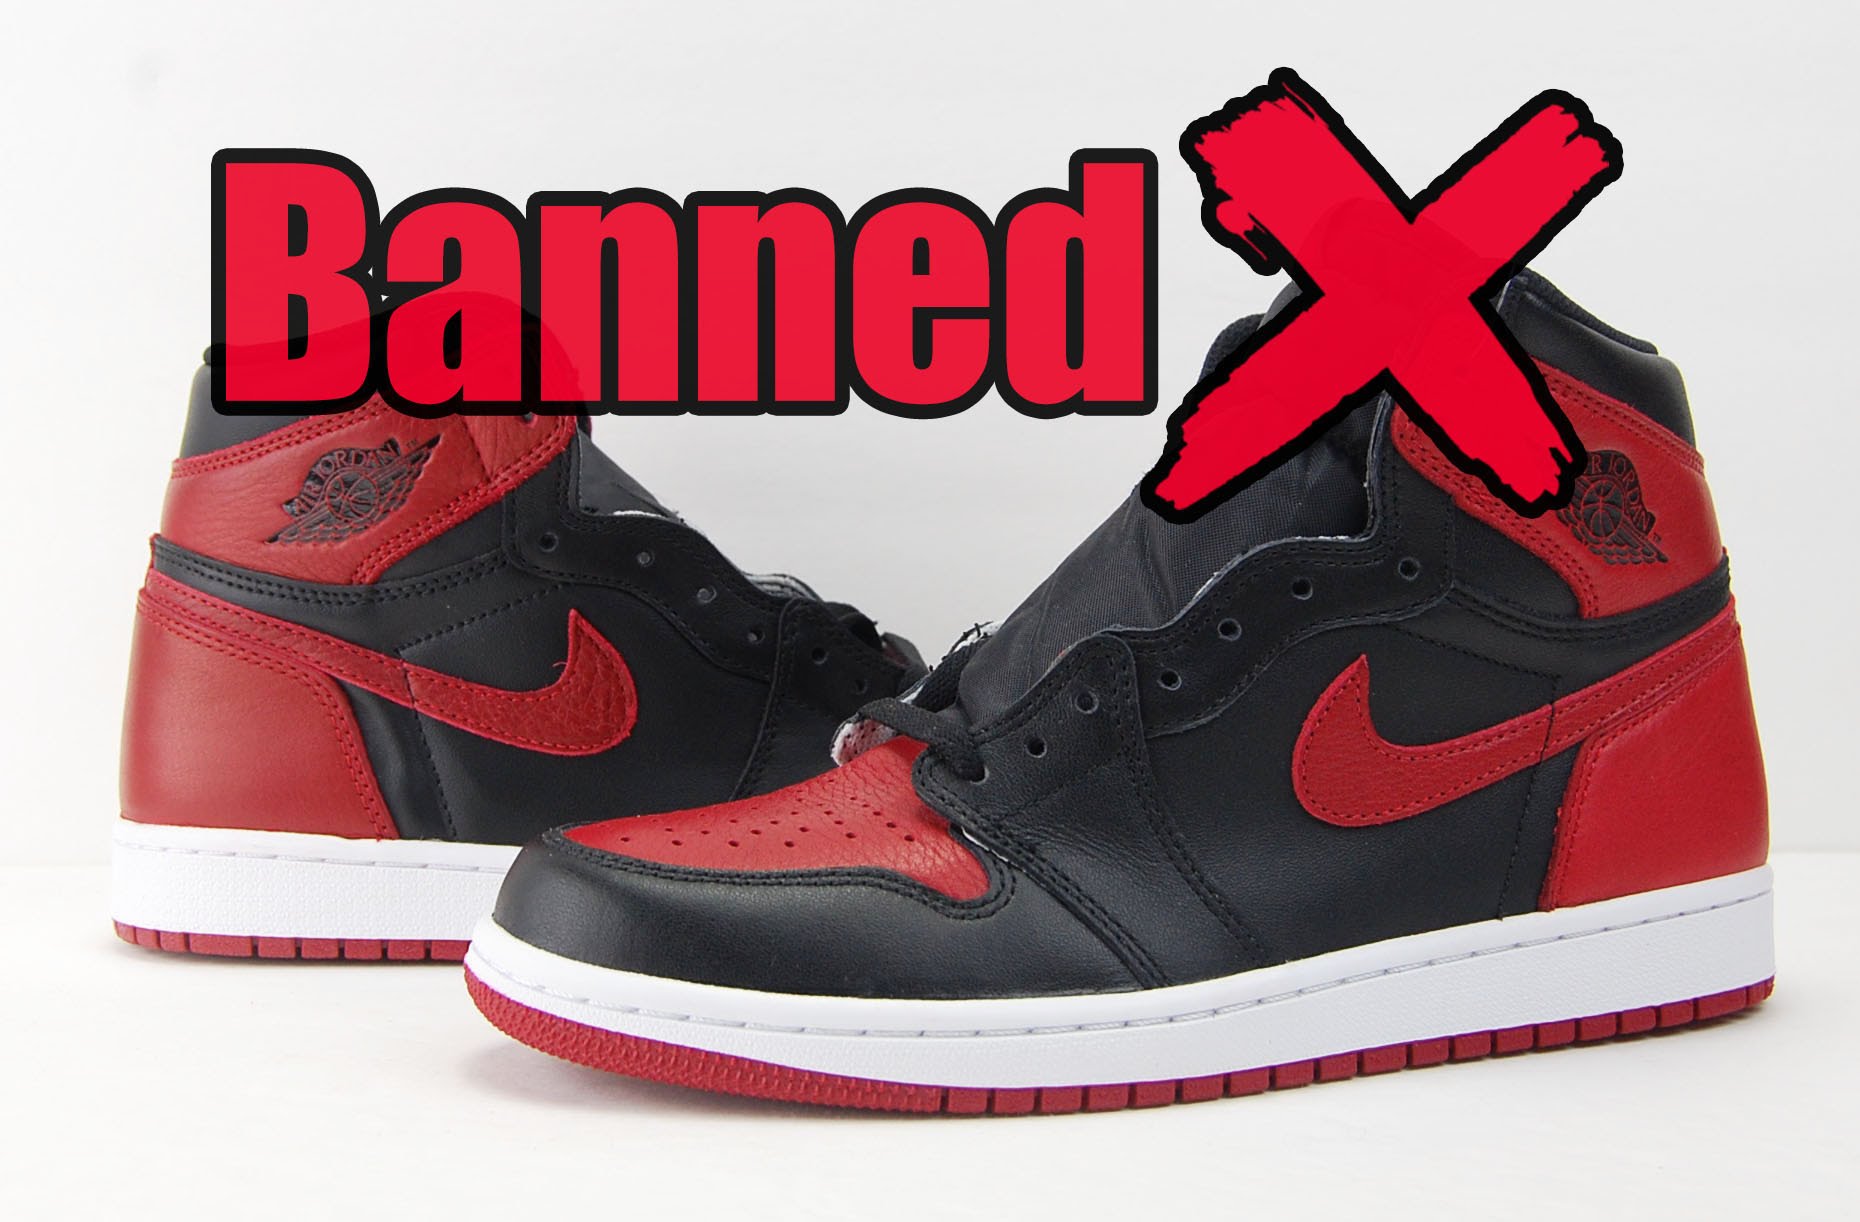 Banned 1.5. Nike Air Jordan 1 banned bred. Nike Air Jordan 1 Mid Retro 2016. Nike Air Jordan 1 High banned. Nike Air Jordan 1 Mid banned.